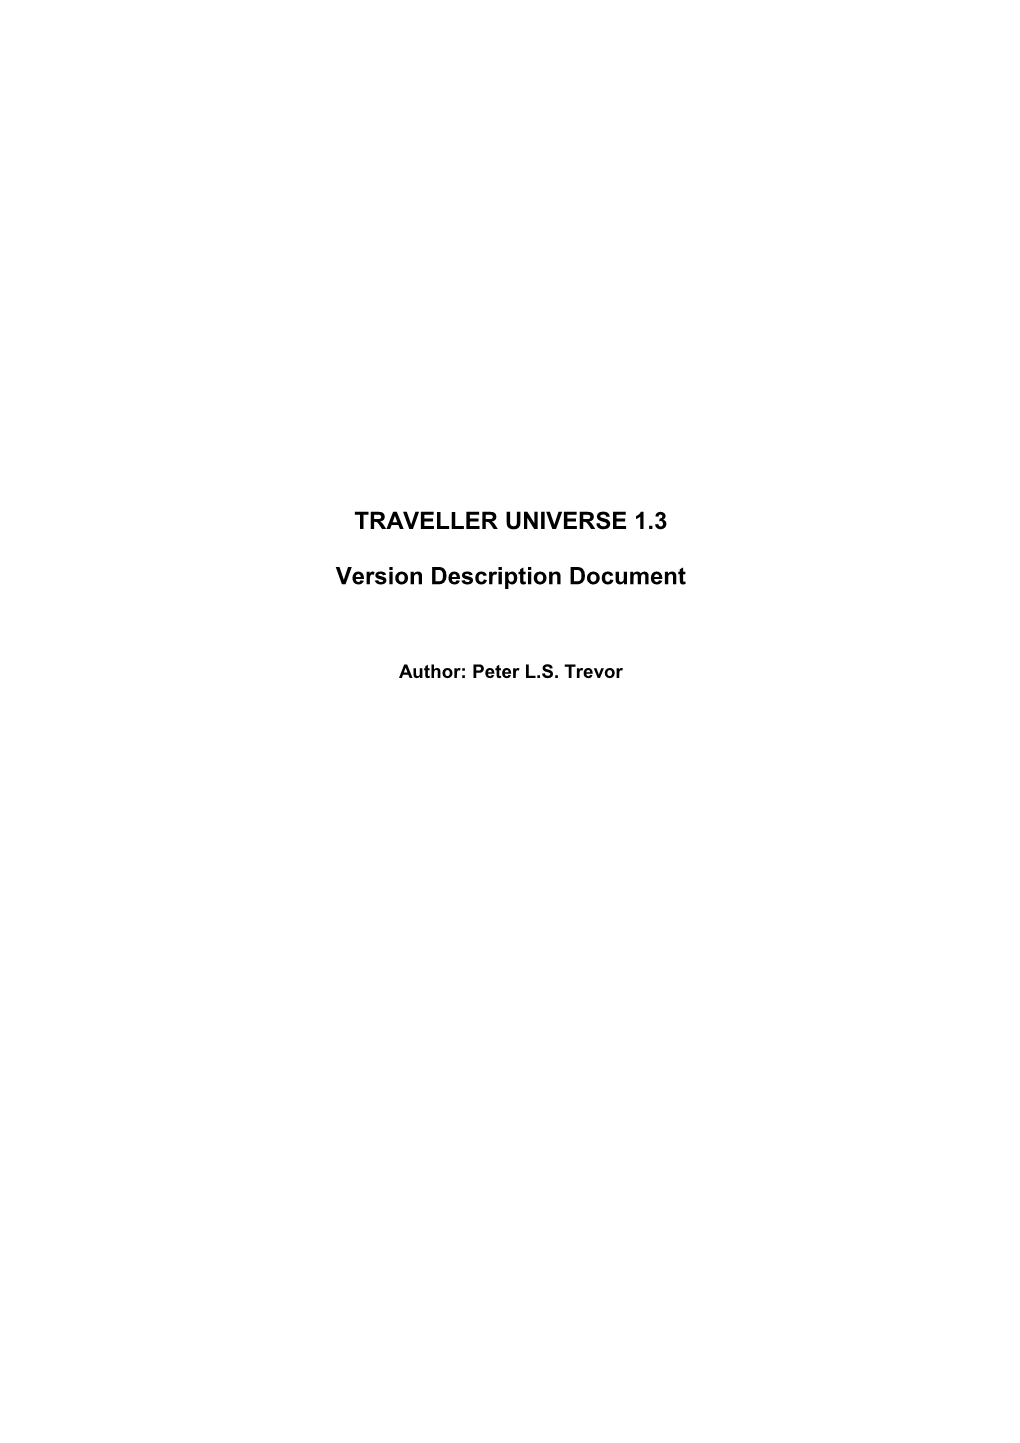 VDD for TU 1.3 Version Description Document